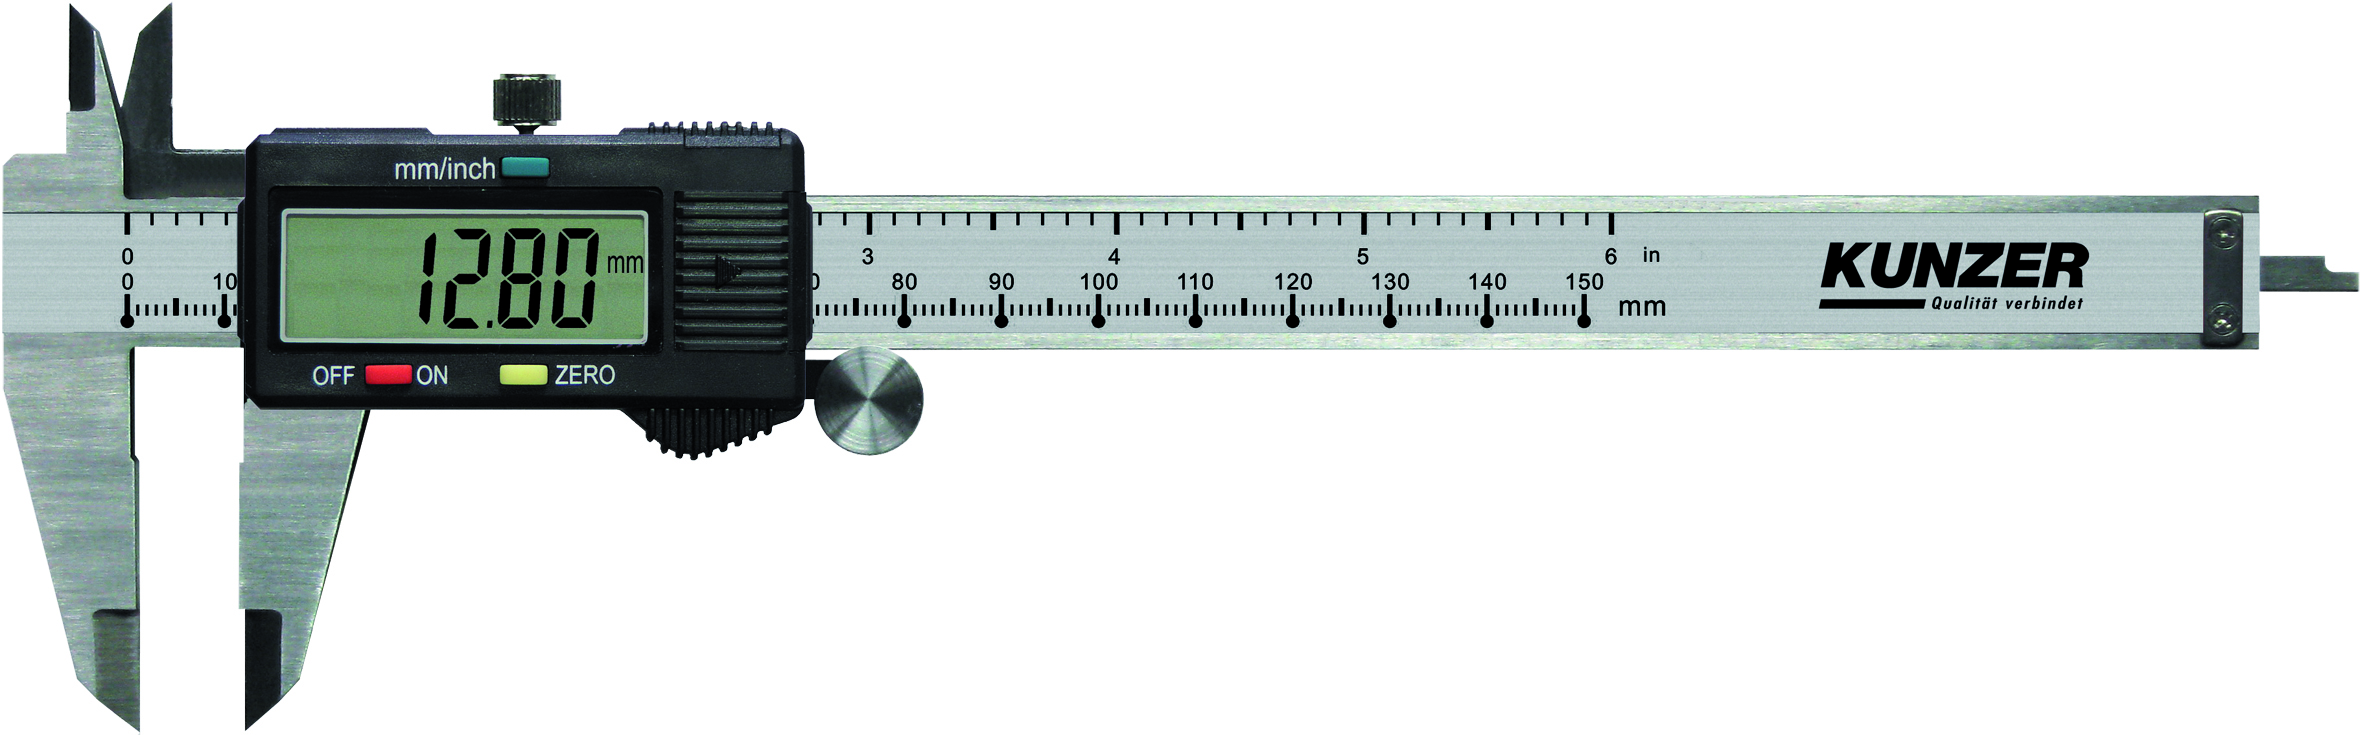 Electronic caliper Digital display measuring range: 0 to 150 mm